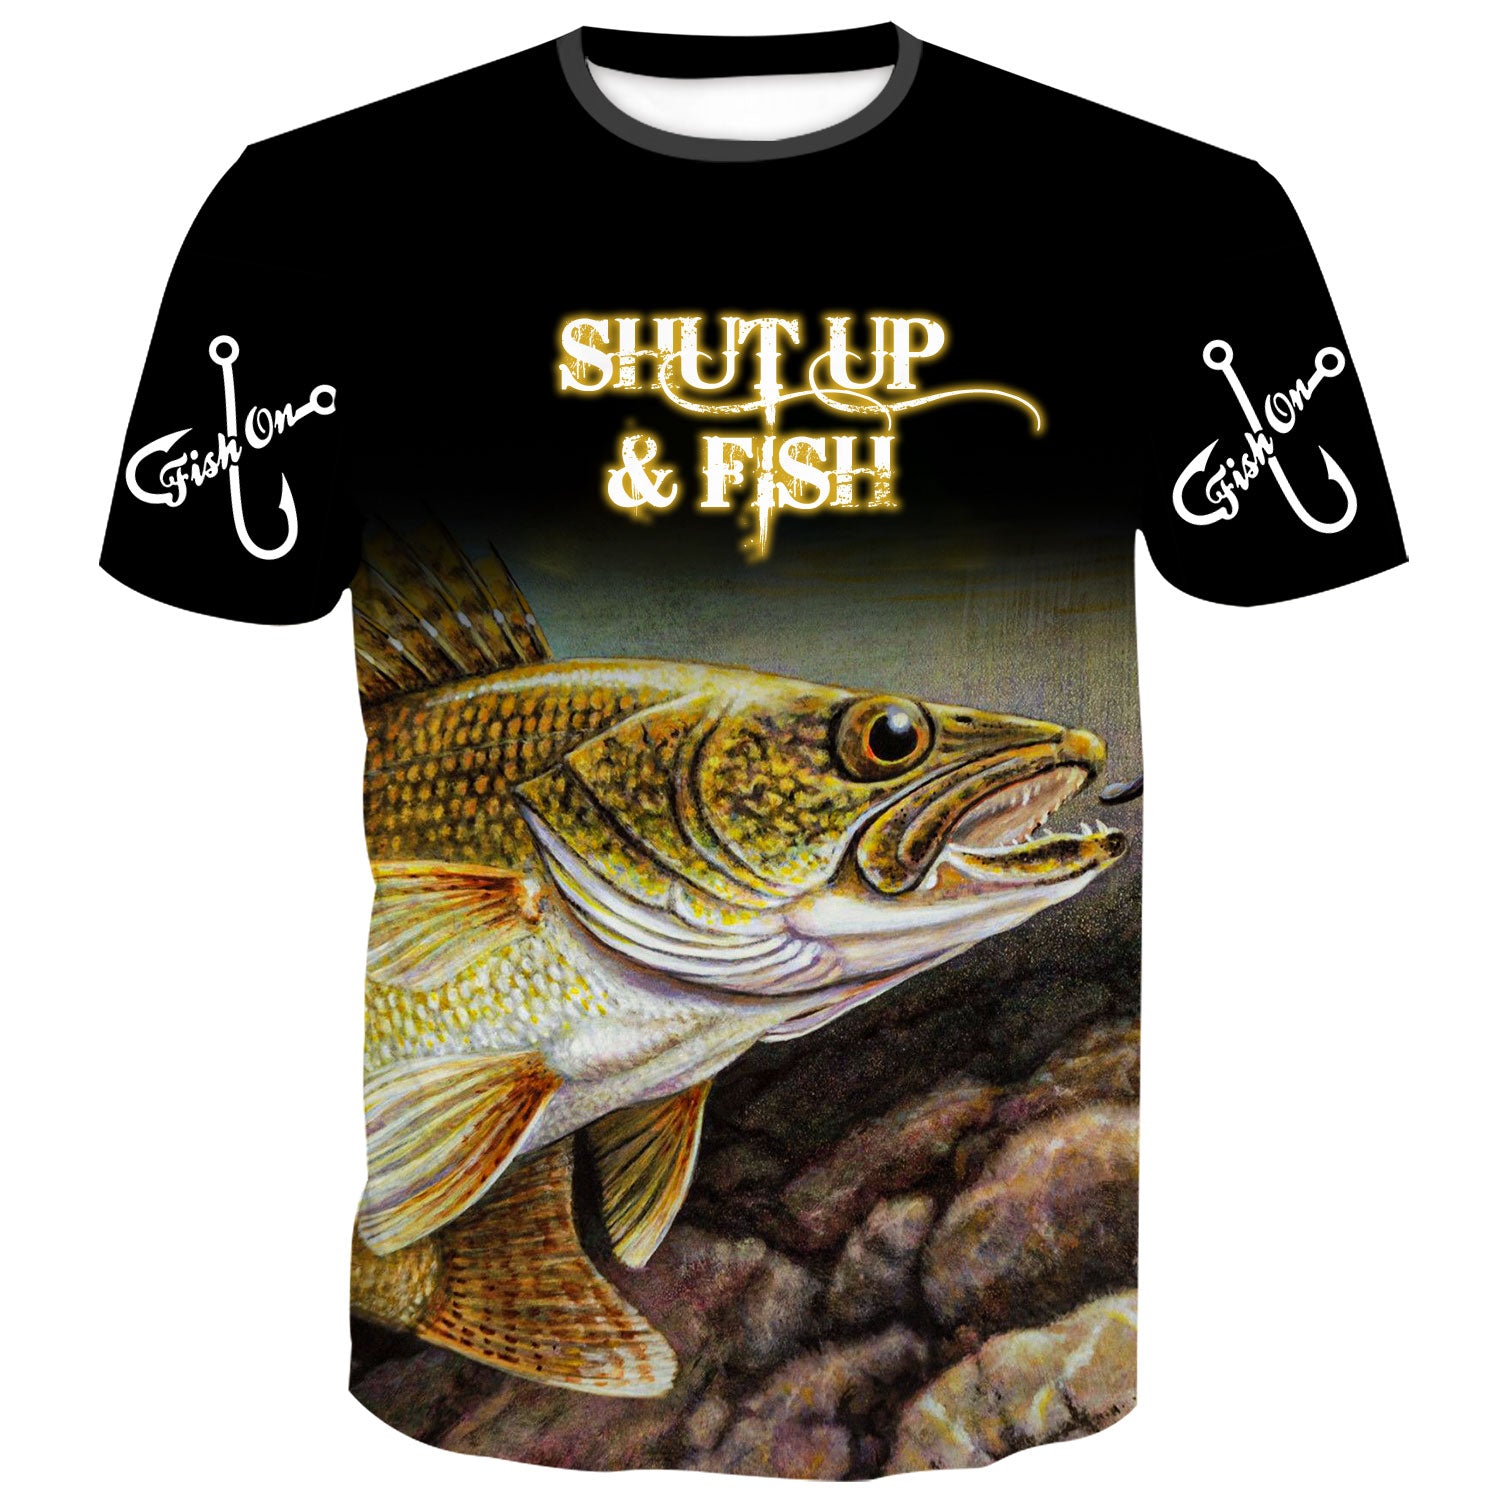 Fishing Jumping Walleye Adult Short Sleeve T-Shirt-Forest Green-XXXL